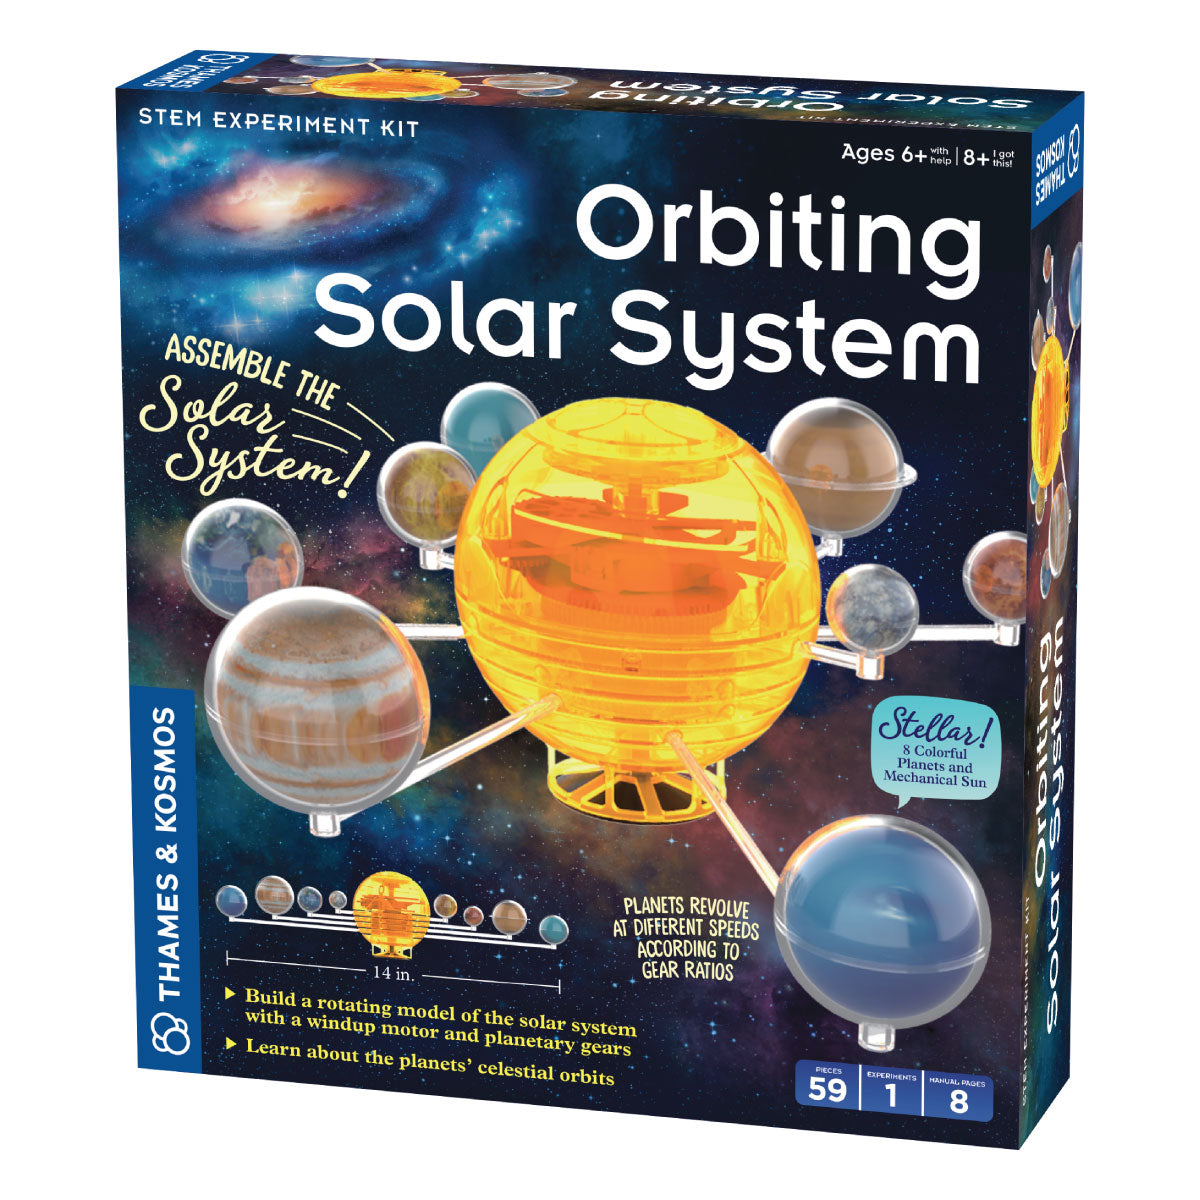 Orbiting Solar System Kit from Thames & Kosmos